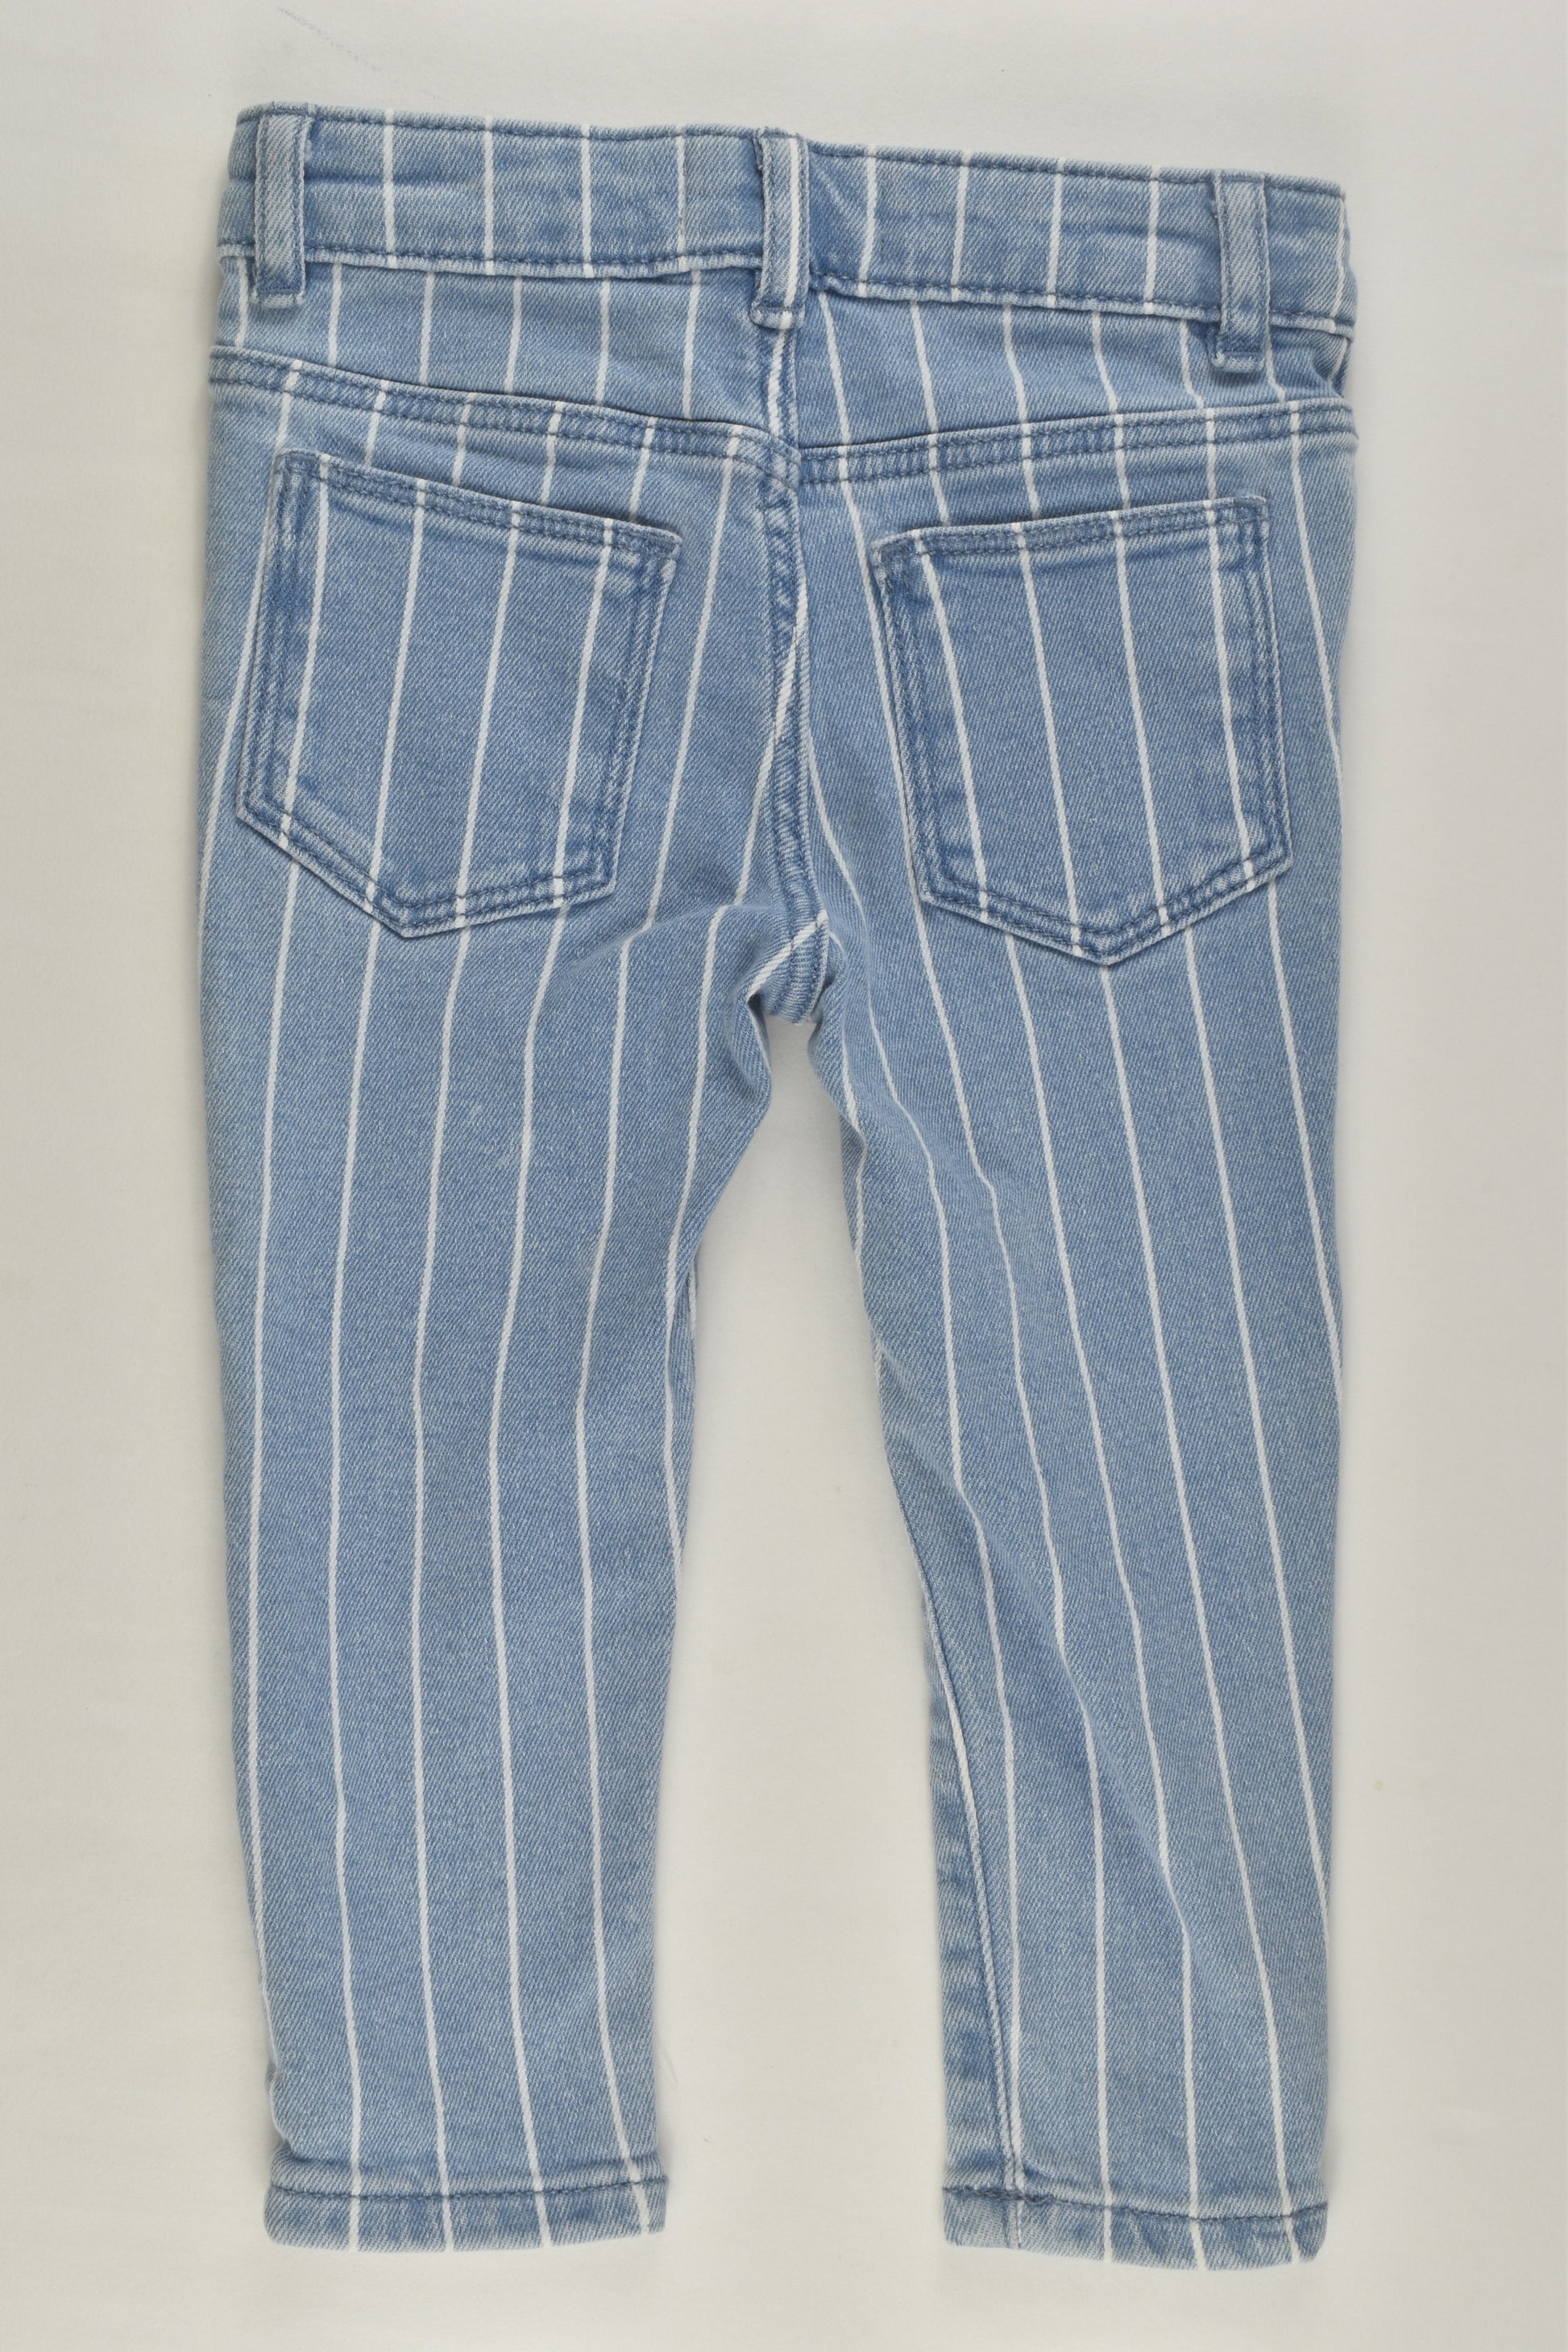 Target Size 1 Striped Stretchy Denim Pants